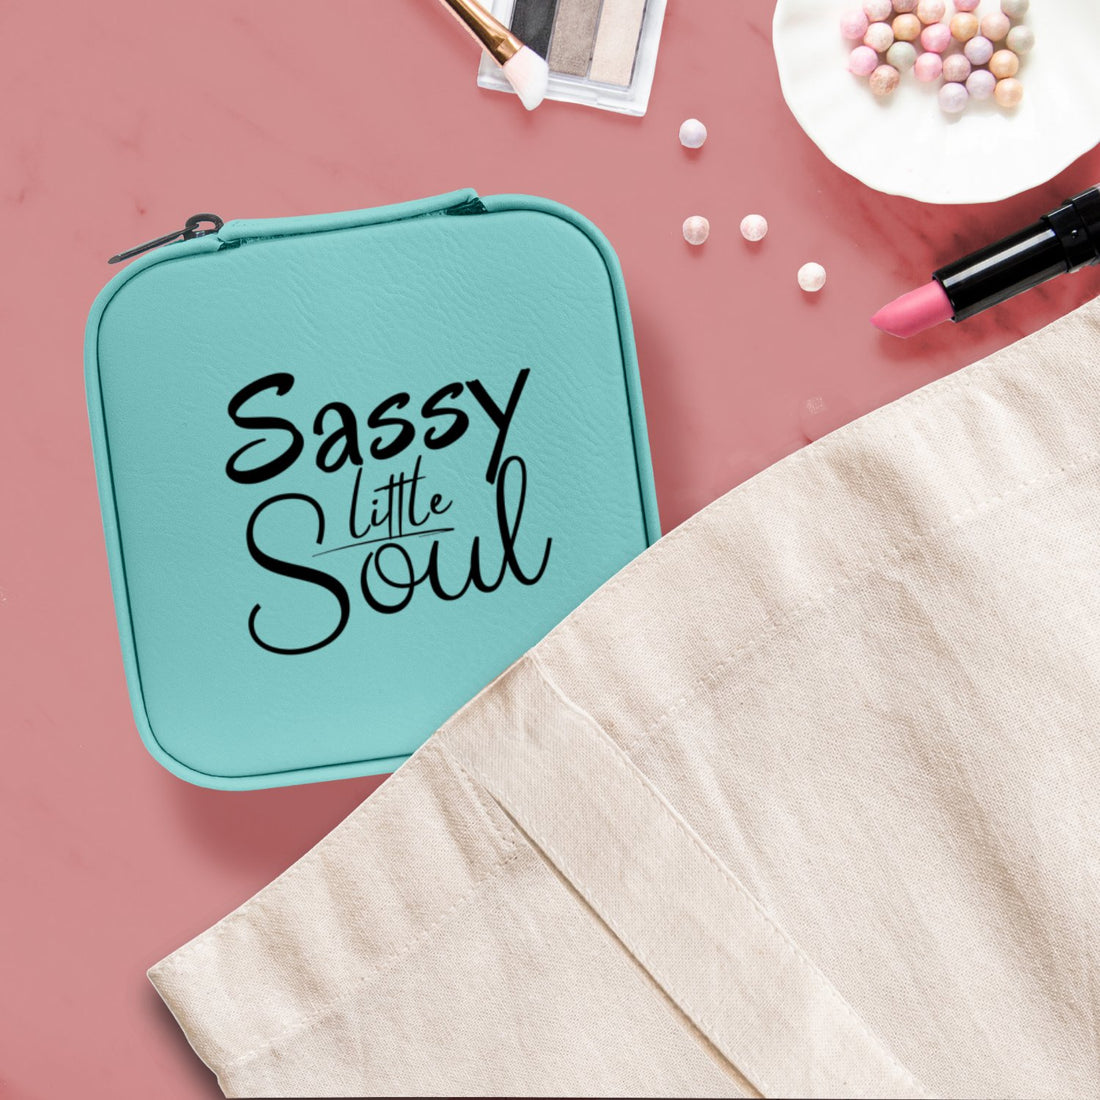 Sassy Soul Jewelry Organizer - Positively Sassy - Sassy Soul Jewelry Organizer